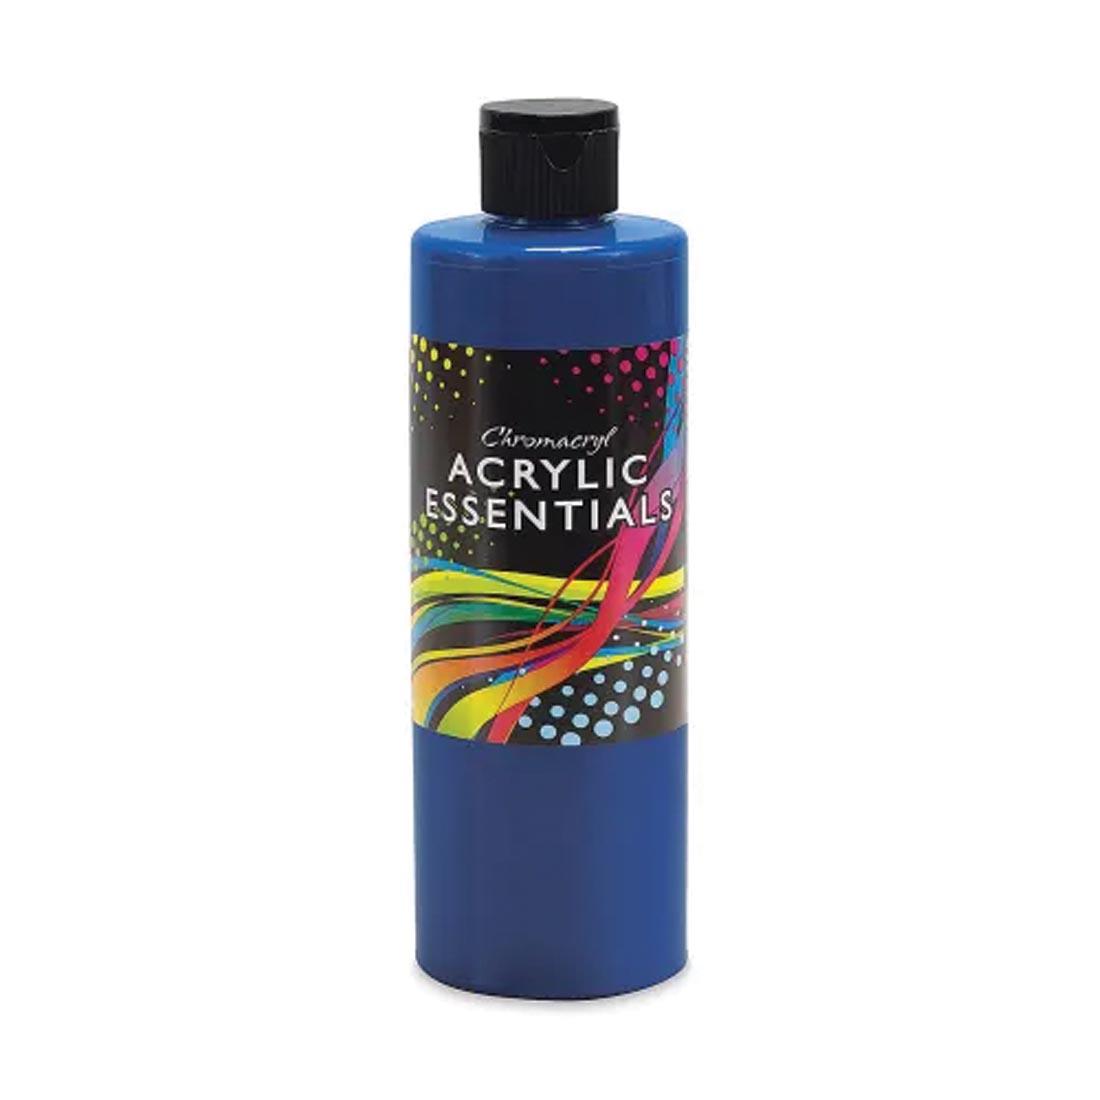 Bottle of Cool Blue Chromacryl Acrylic Essentials Paint